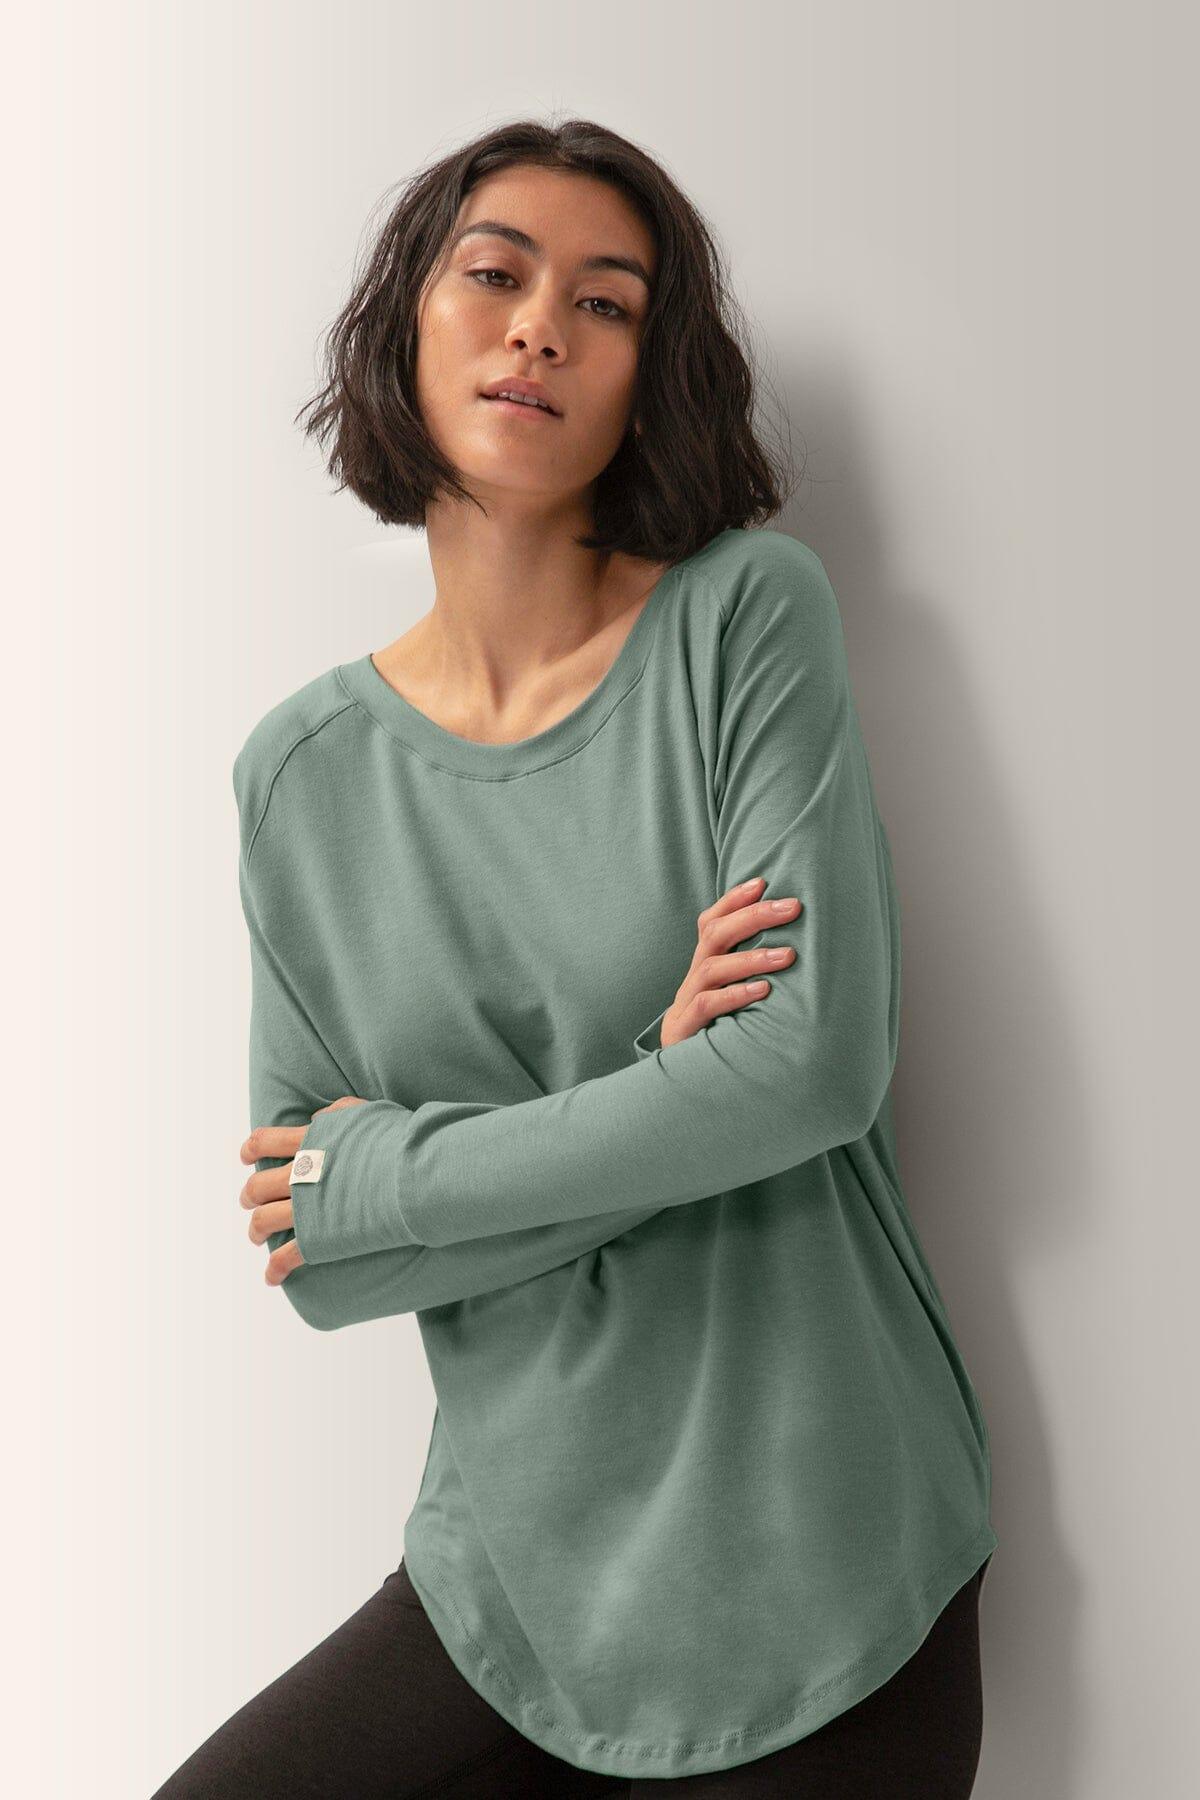 Femme qui porte le chandail à manche longue Cozy de Rose Boreal./ Women wearing the Cozy Long Sleeve Shirt by Rose Boreal. -Jade